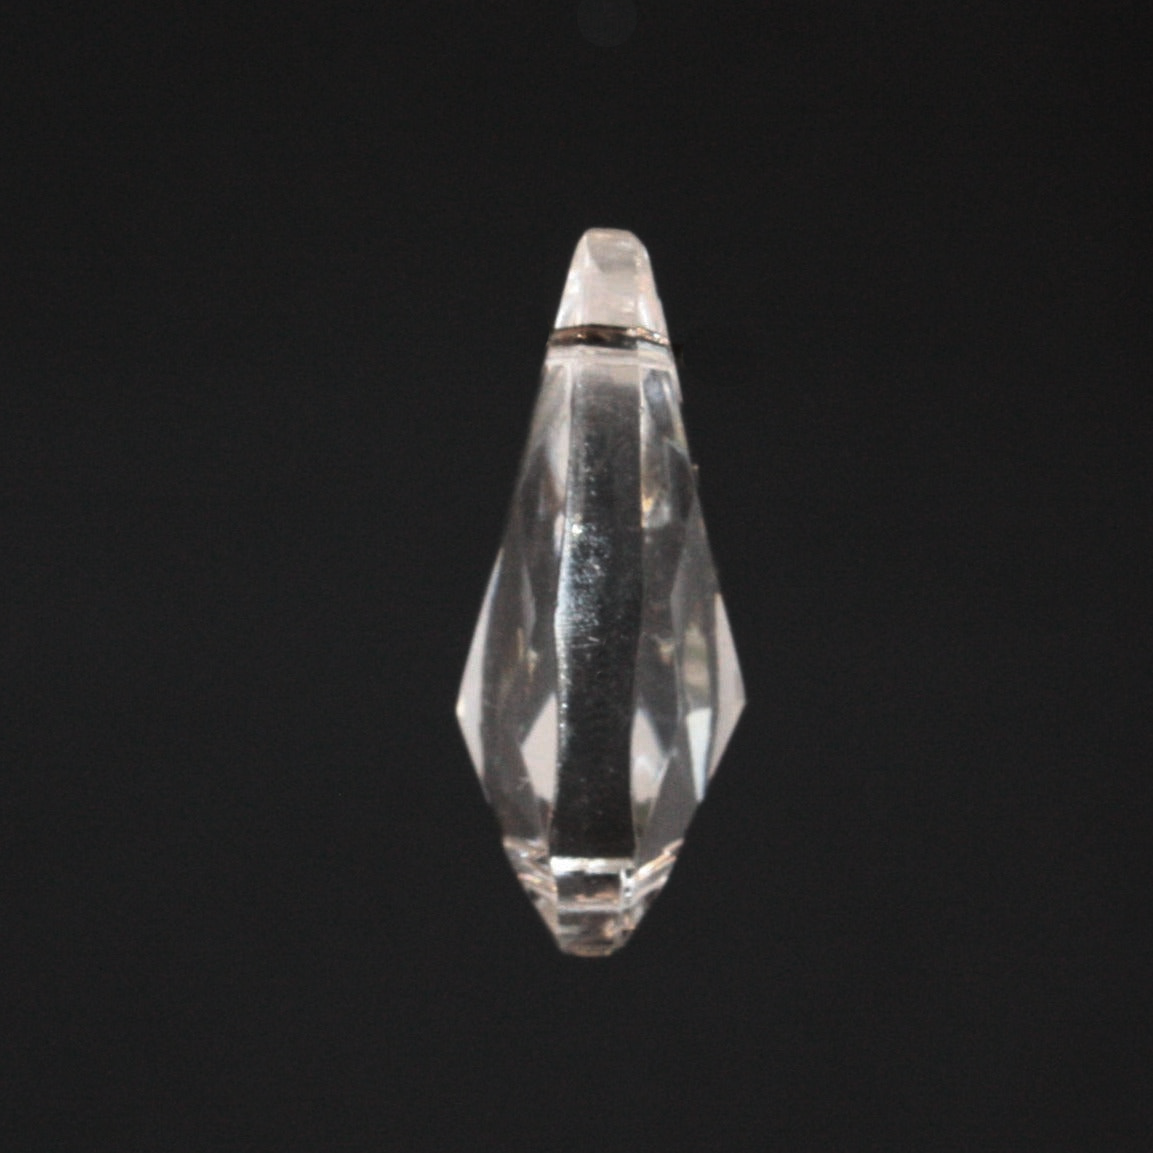 Crystal 1-Hole Full Cut Jewel